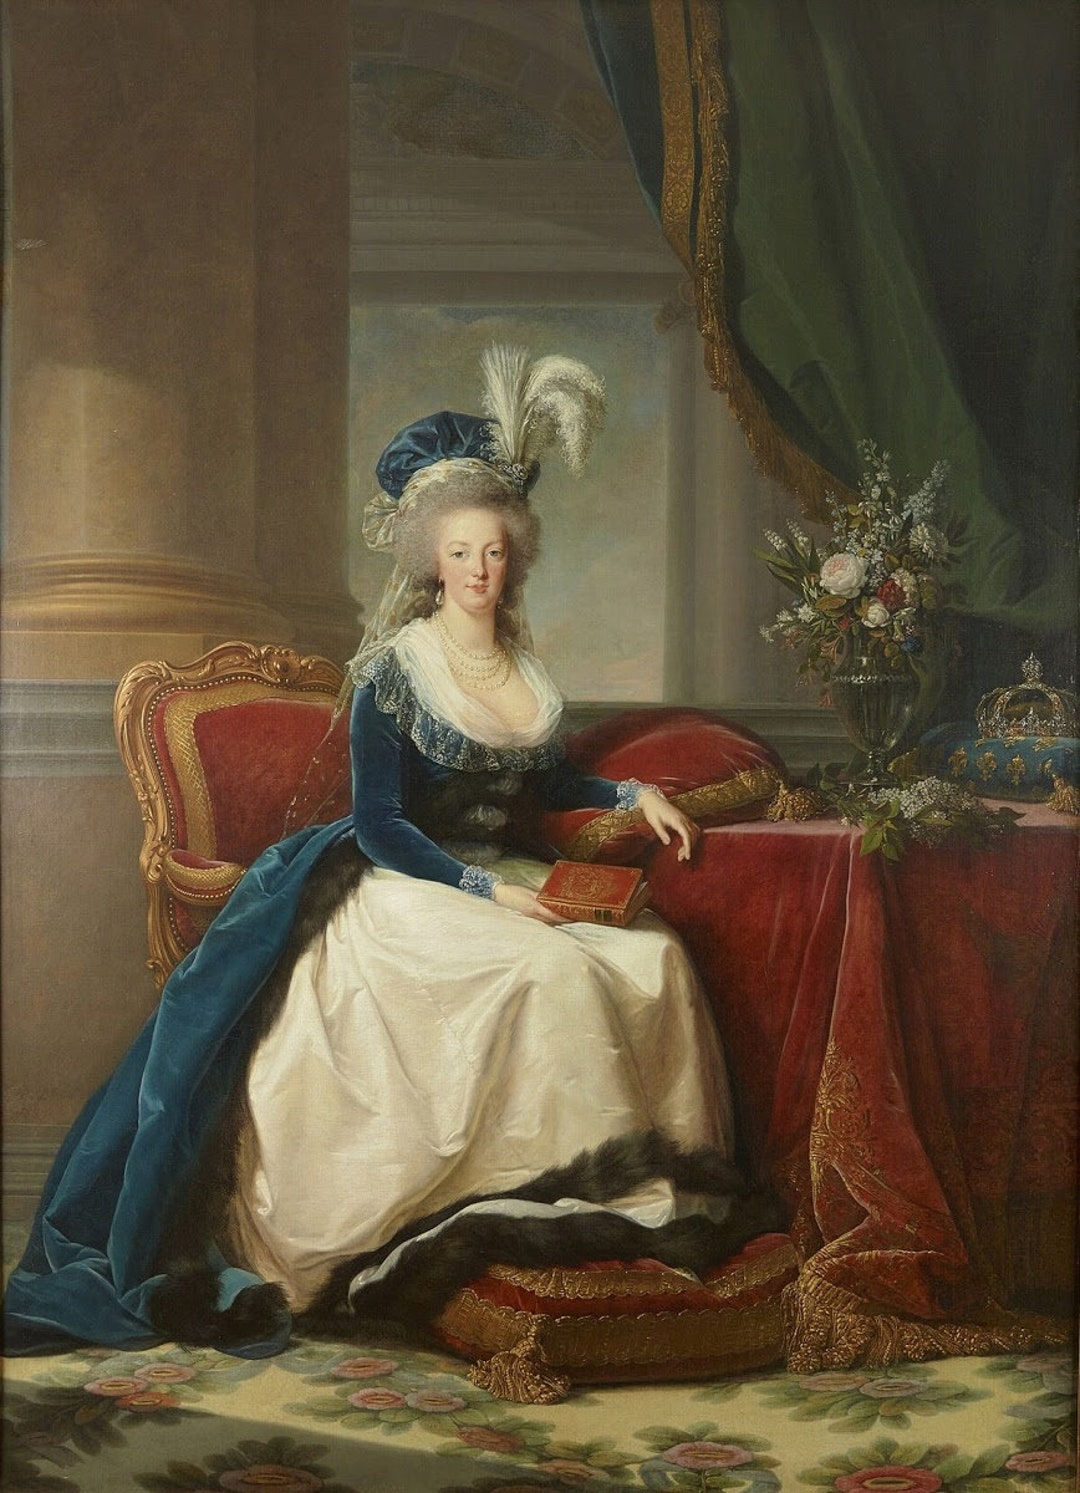 Marie Antoinette Queen of France by Elisabeth Vigee Le Brun - Etsy